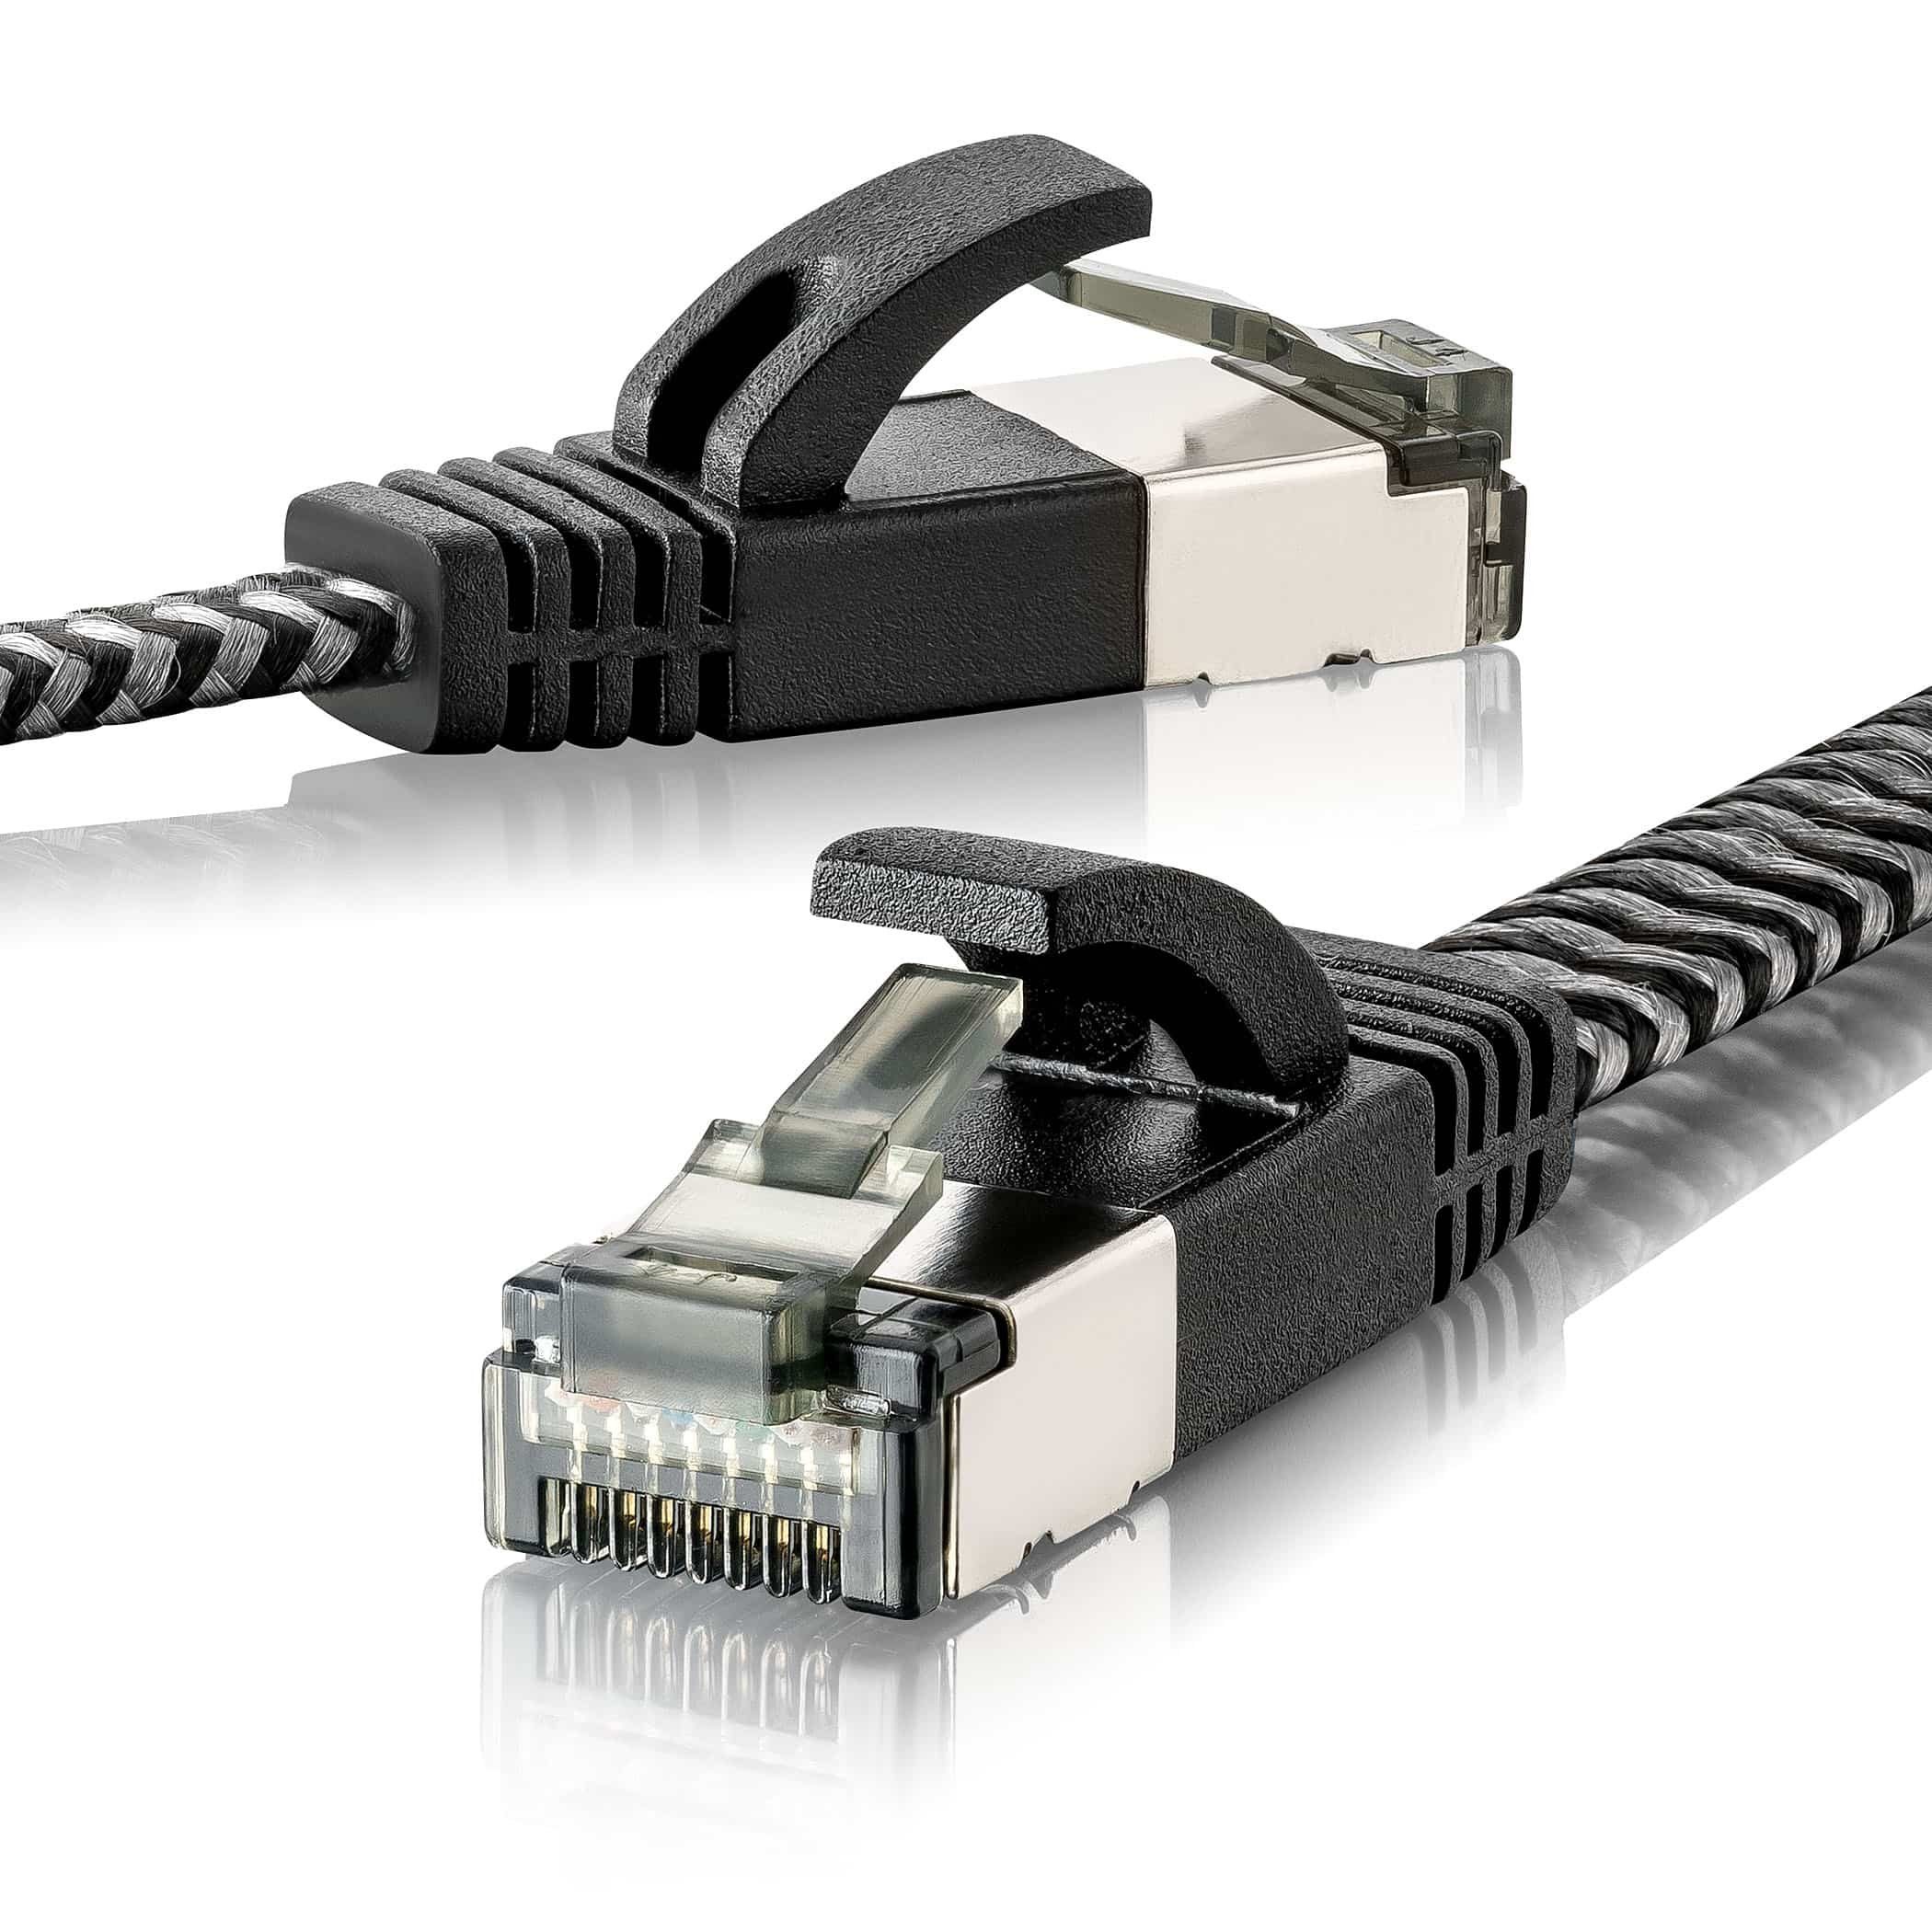 SEBSON »LAN Kabel 15m CAT 7 flach, Netzwerkkabel 10 Gbit/s, RJ45 Stecker  für Router, PC, TV, NAS, Spielekonsolen - Ethernet Kabel U-FTP abgeschirmt«  Netzkabel online kaufen | OTTO